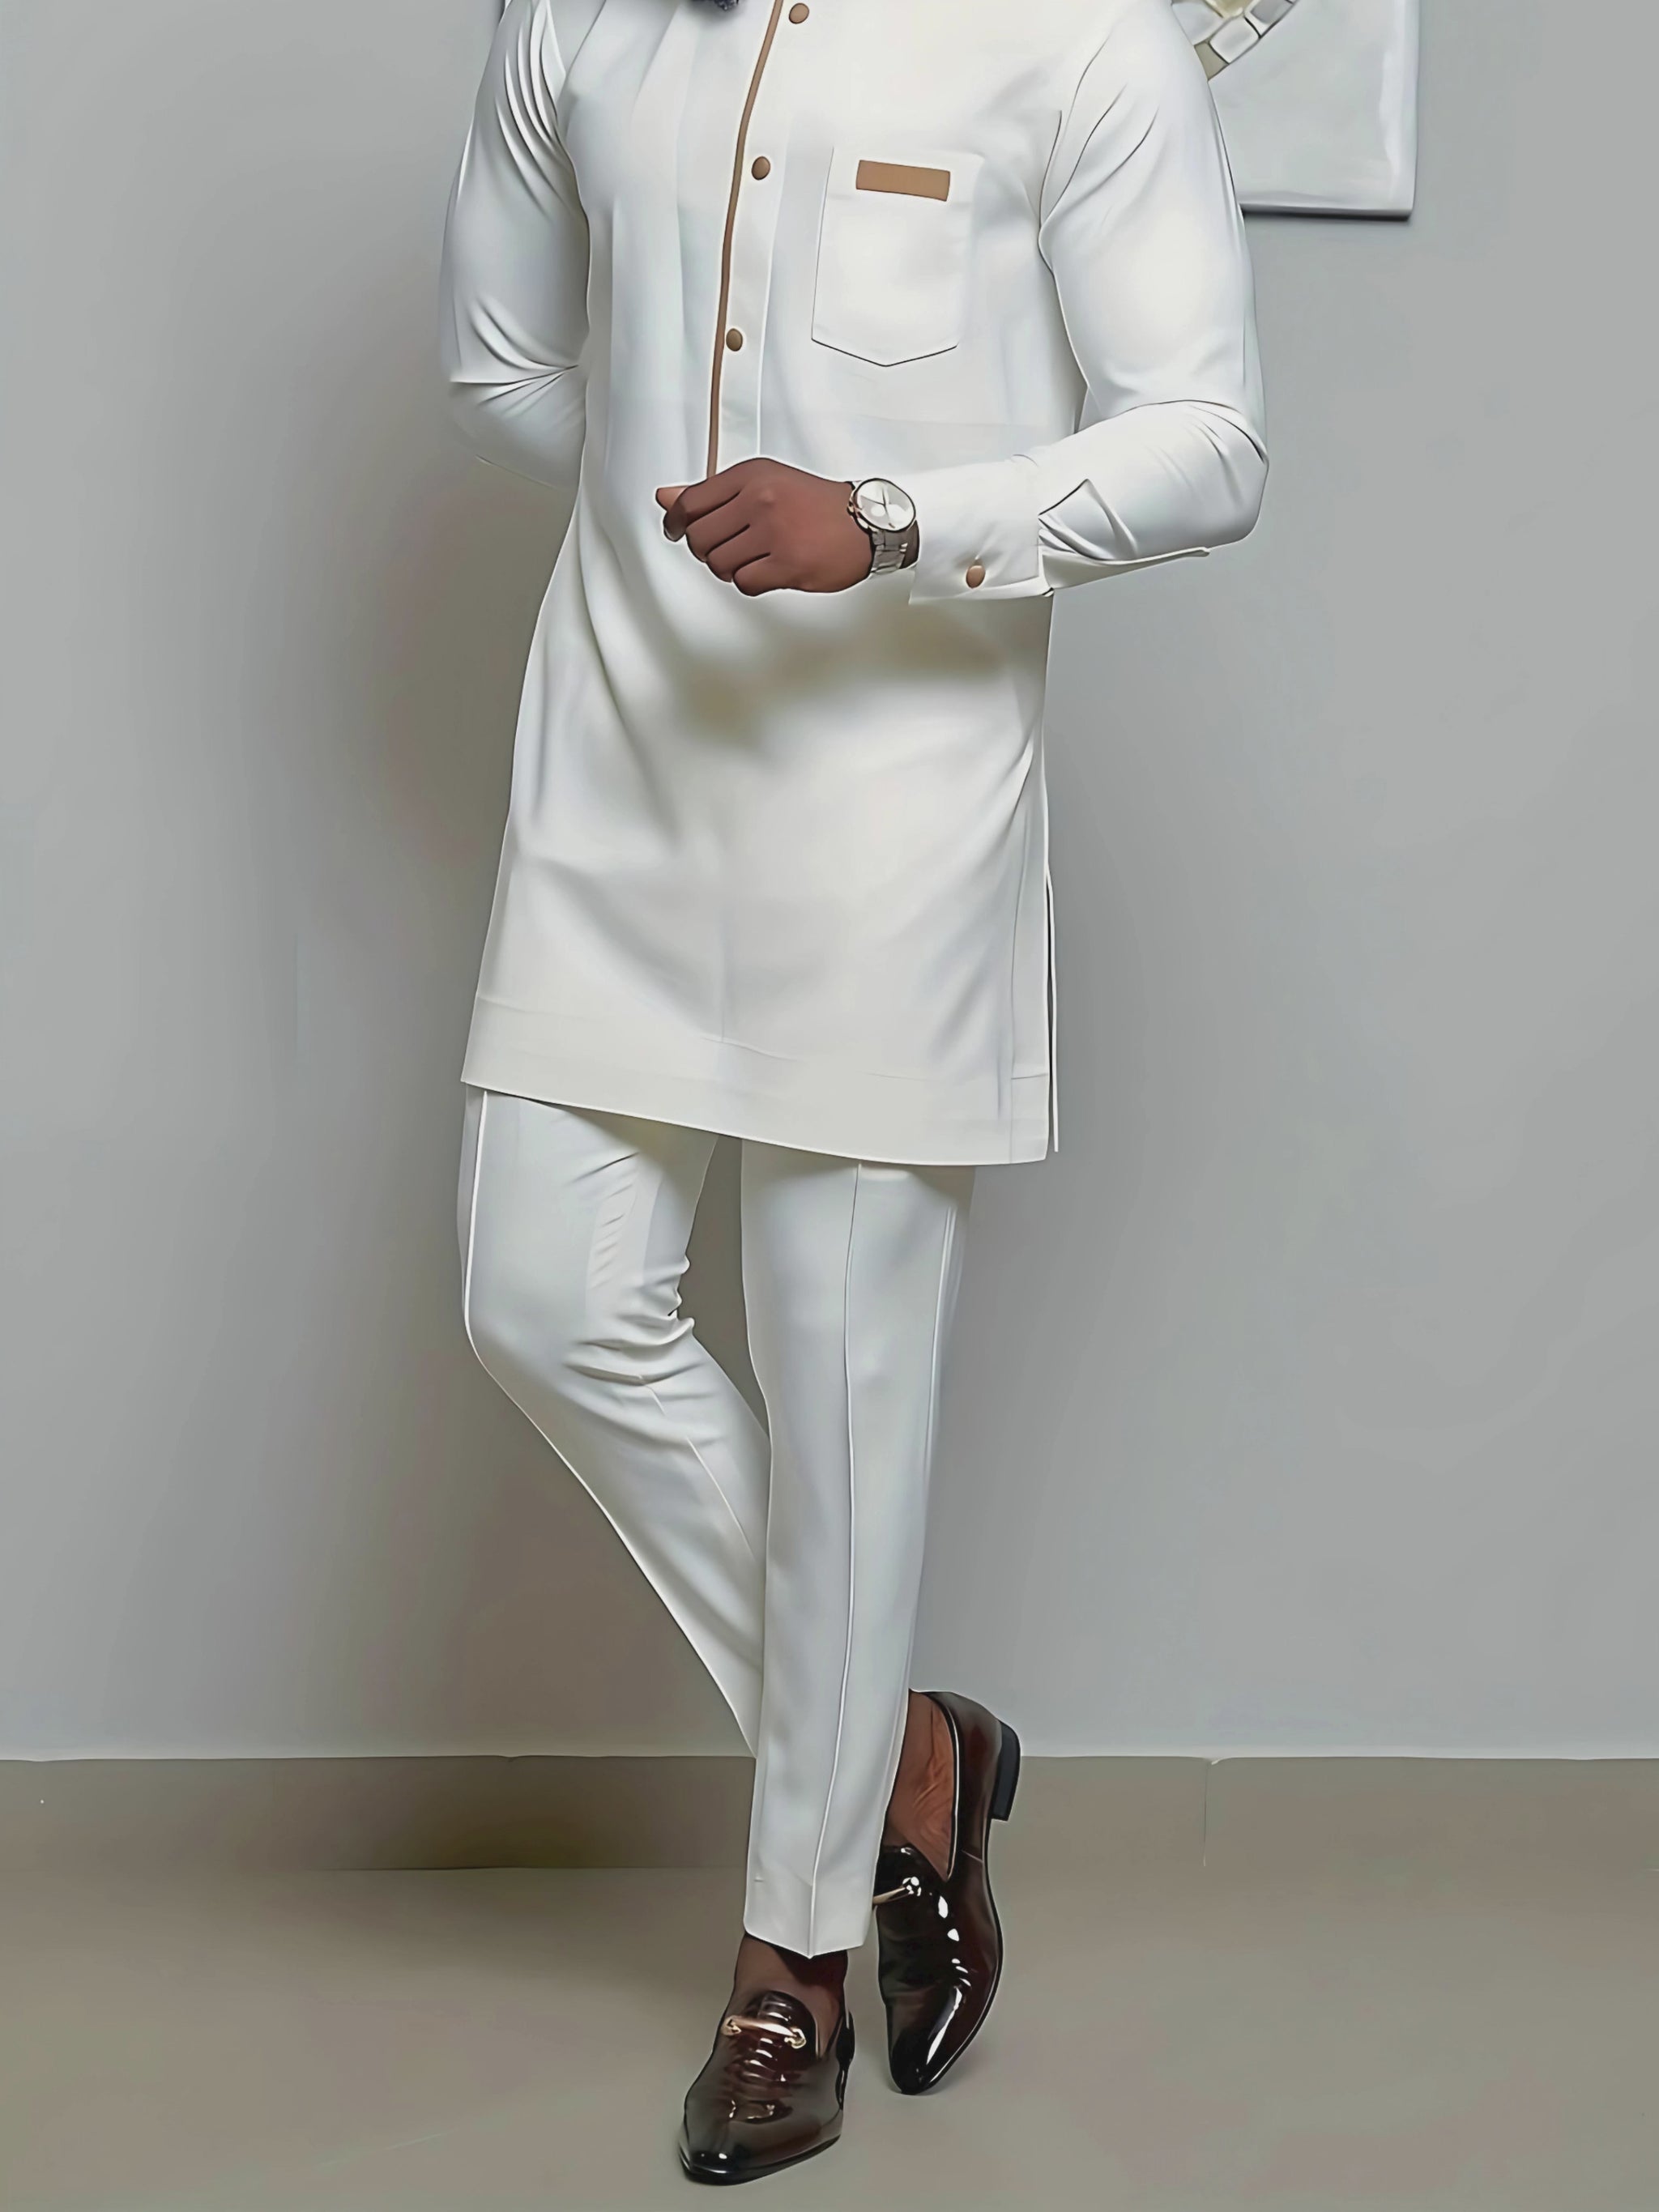 African Men Kaftan, Custom Sizing, White, Traditional African Clothing, Luxury Men's Fashion, Cultural Heritage, Stylish Ethnic Wear